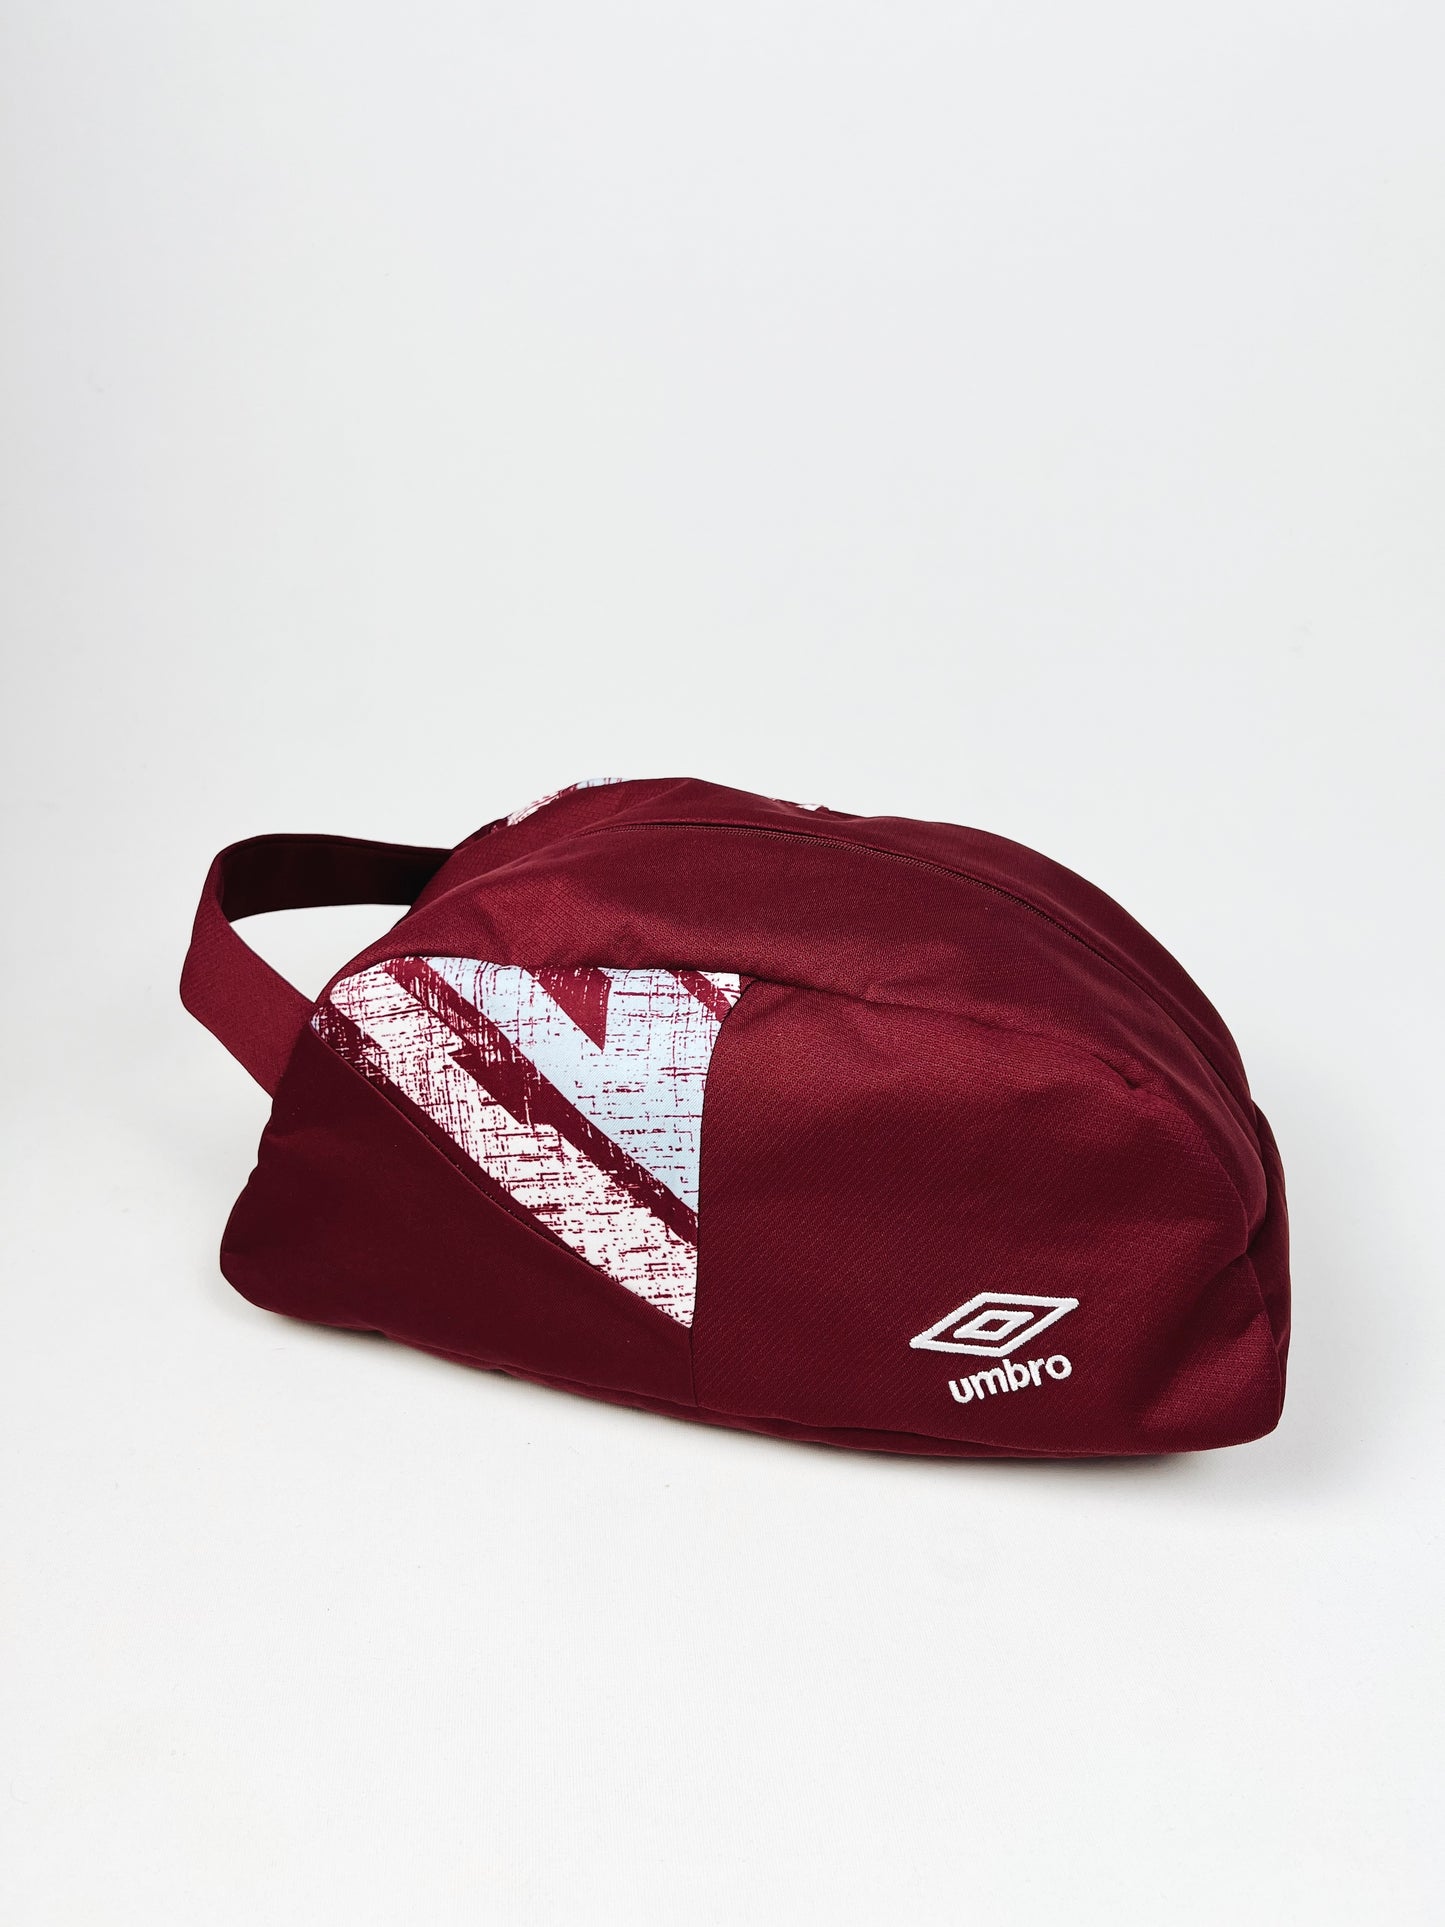 West Ham Boot Bag